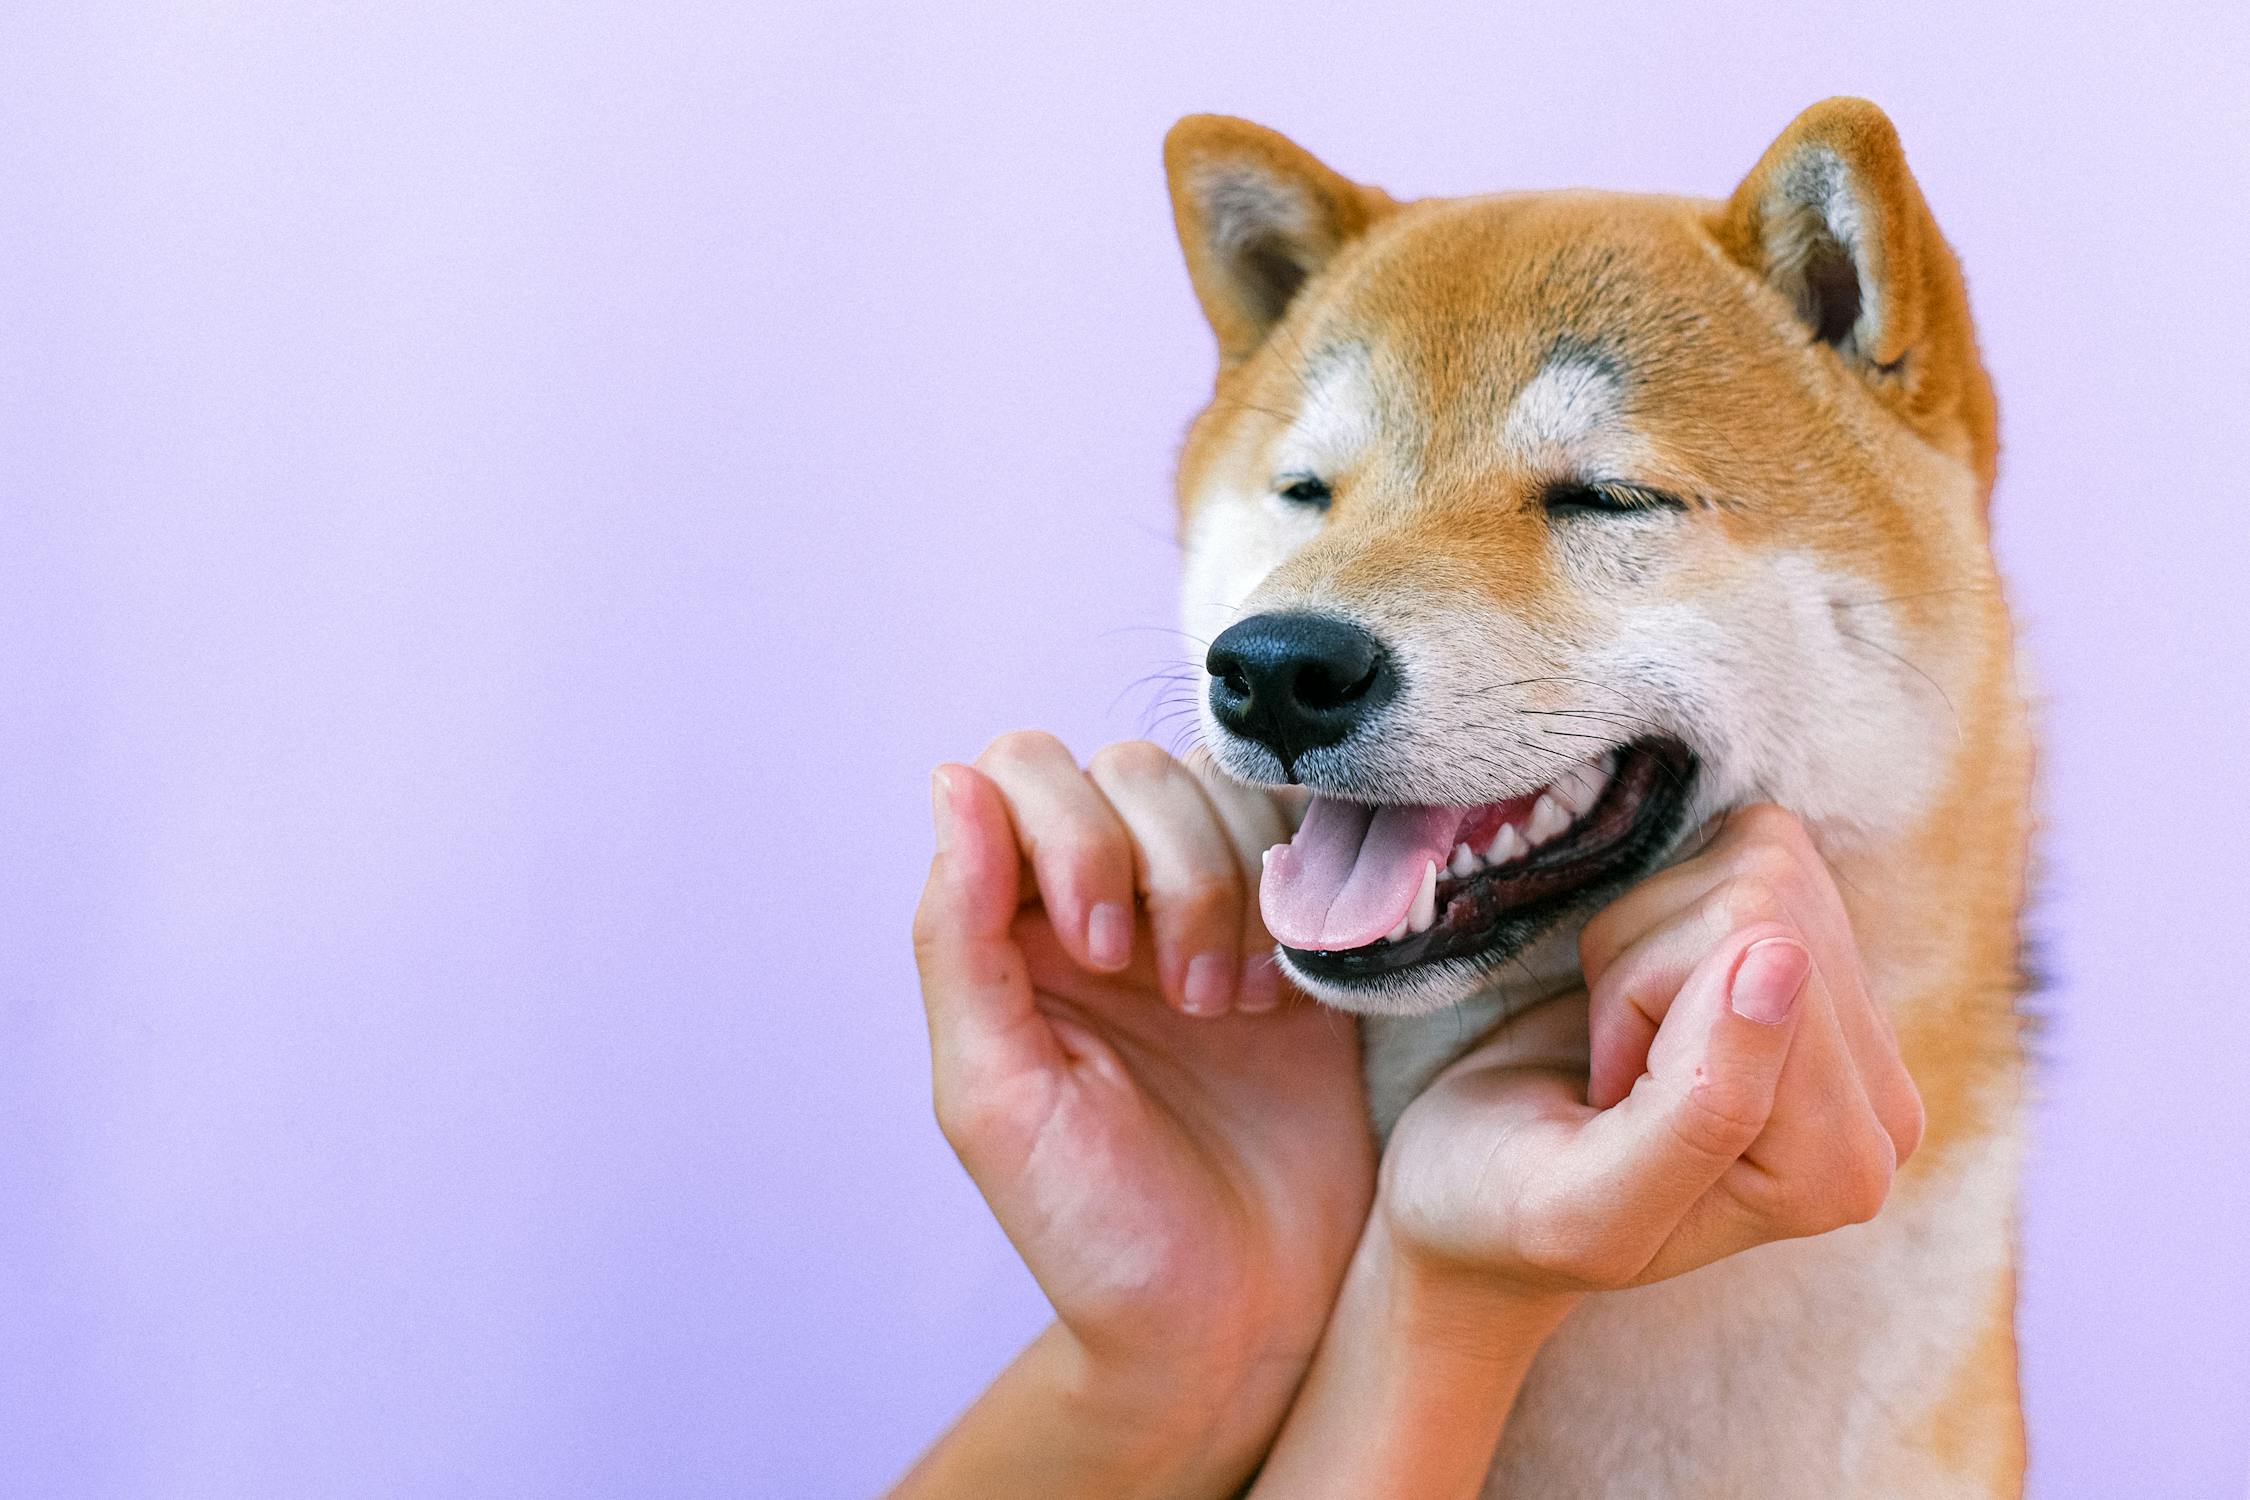 A happy Shiba Inu dog being pet.